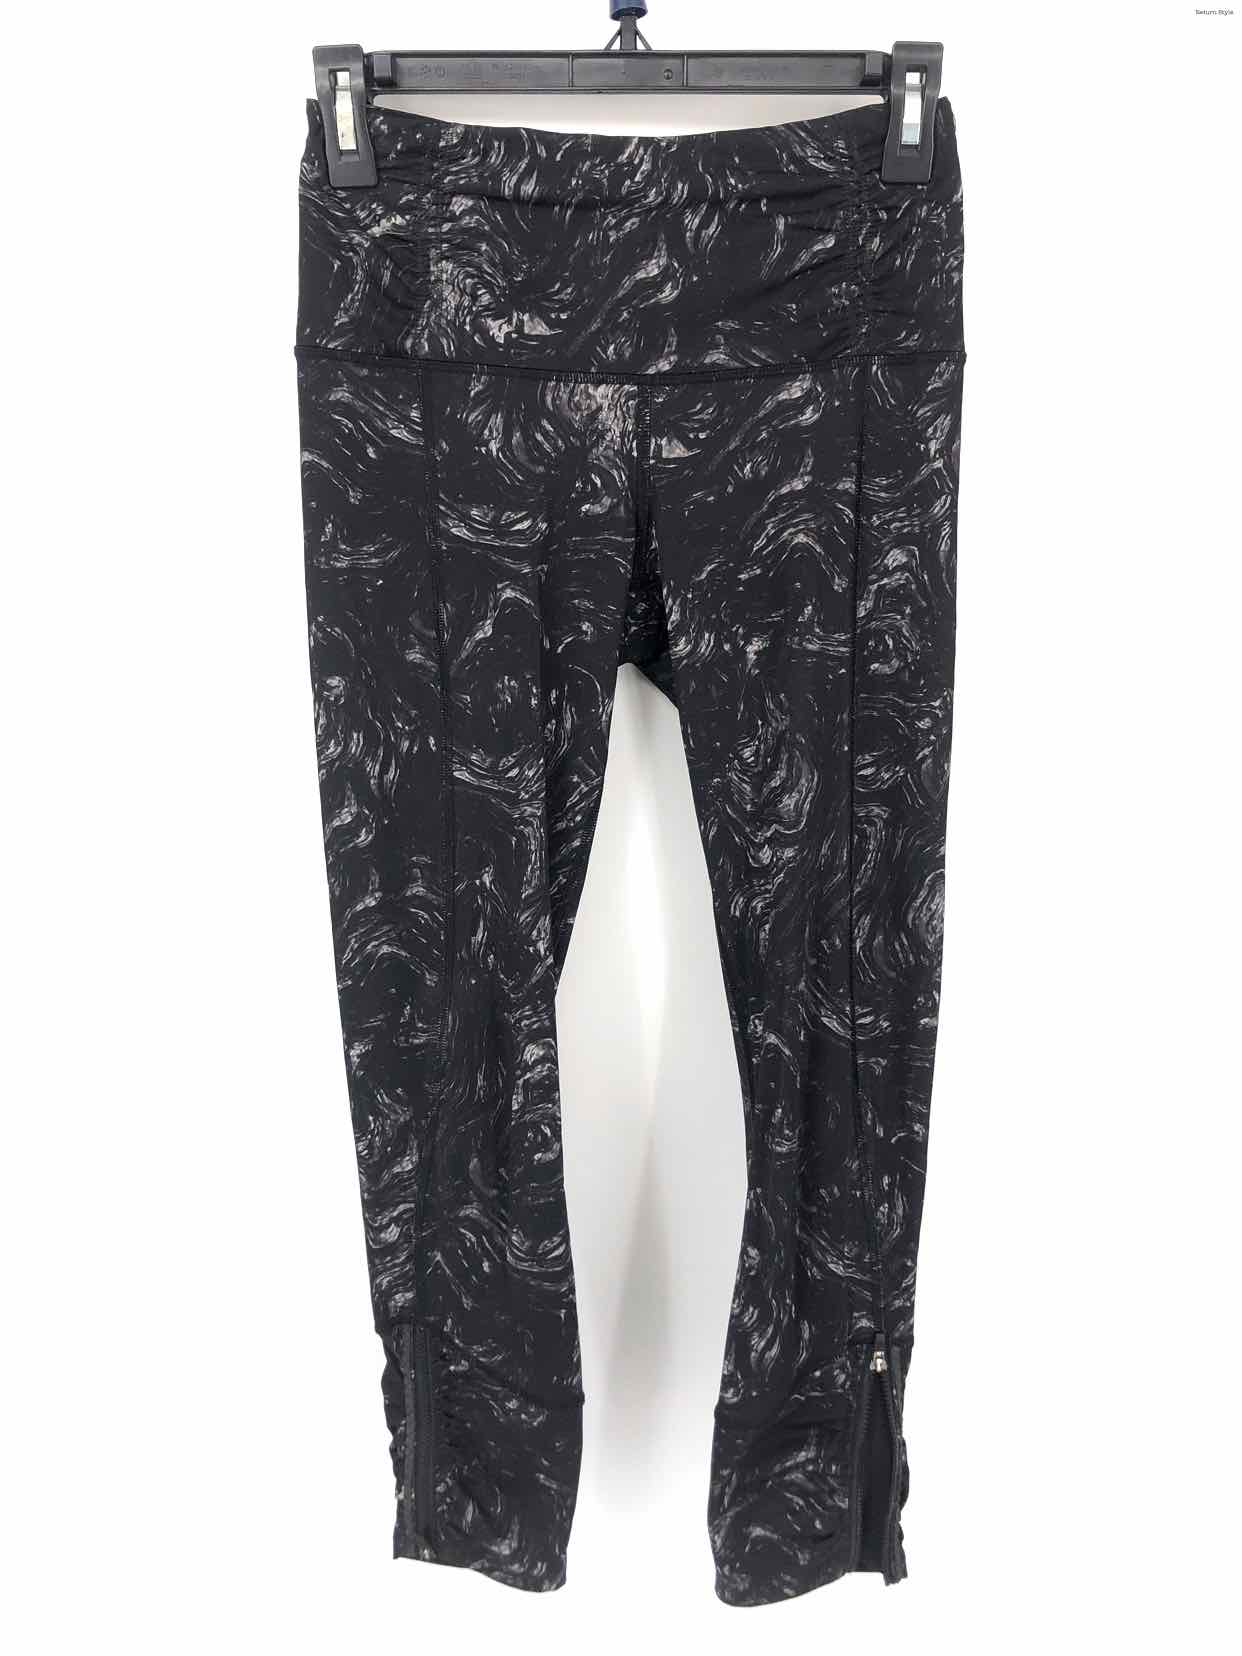 LULULEMON Black Gray Marble Print 7/8 Length Size 4 (S) Activewear Bottoms